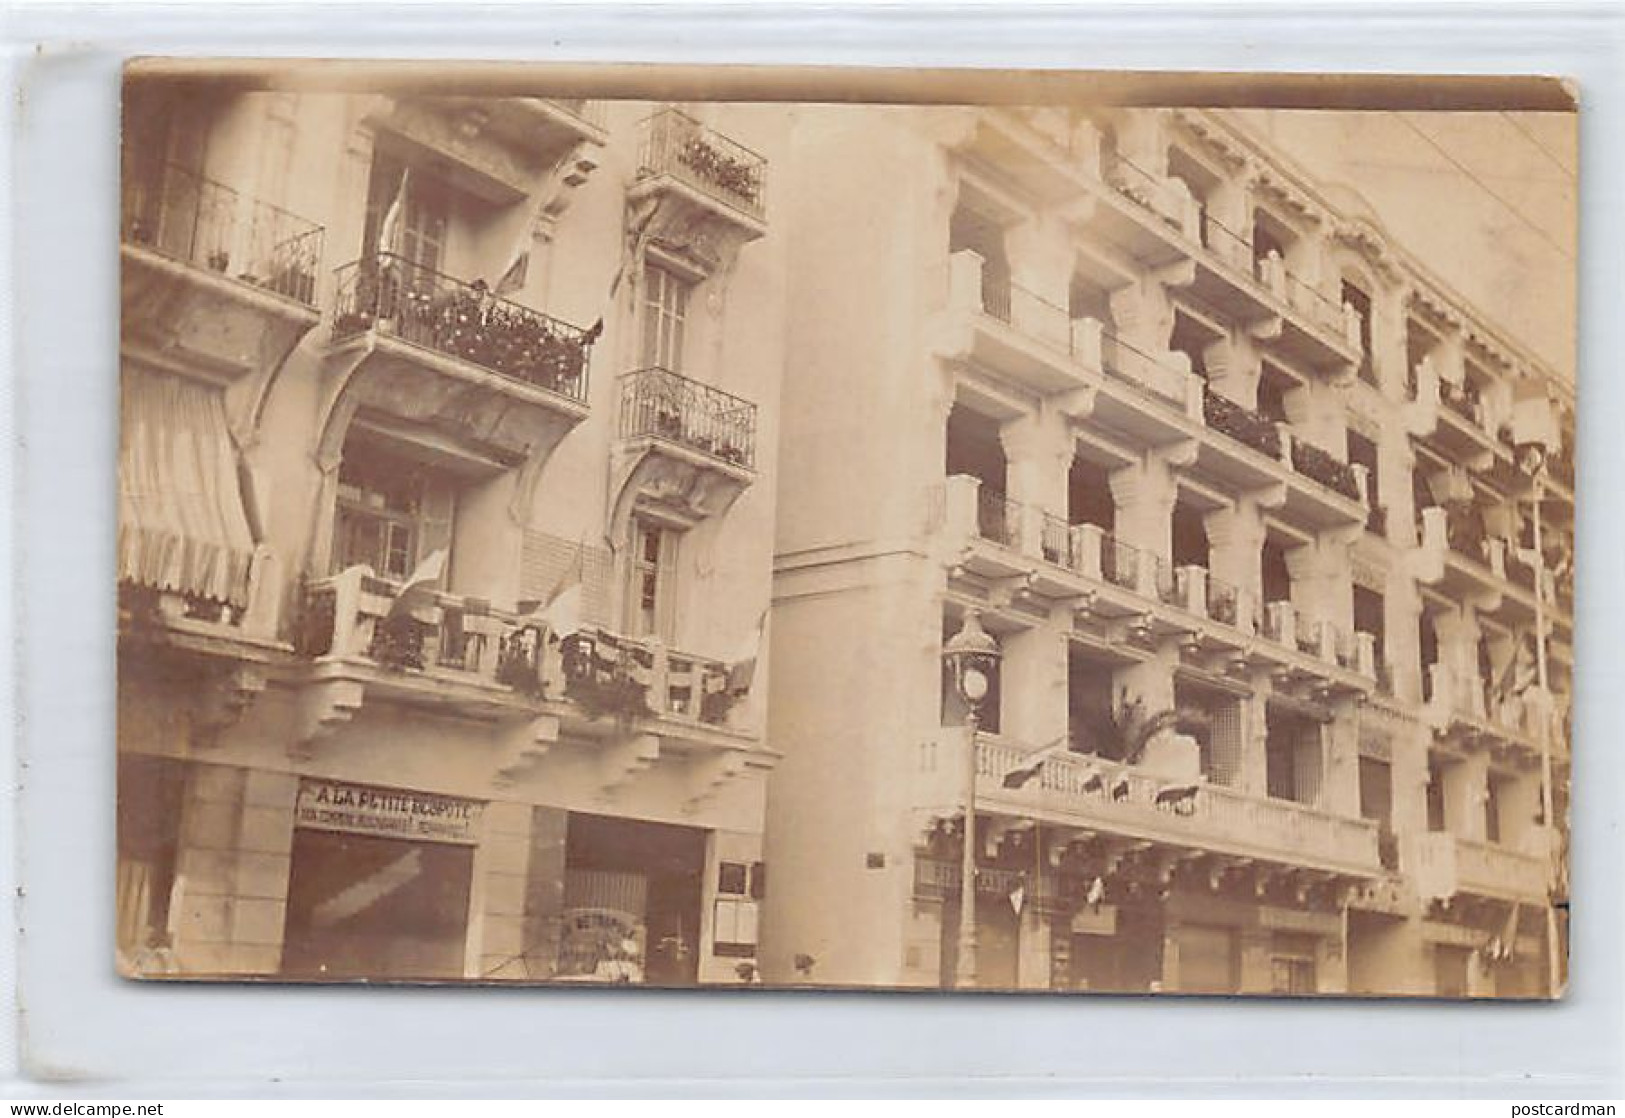 Tunisie - TUNIS - Le 14 Juillet 1913 - Magasin A La Petite Despote - Restaurant Du Midi - CARTE PHOTO Juillet 1906 - Ed. - Tunesien